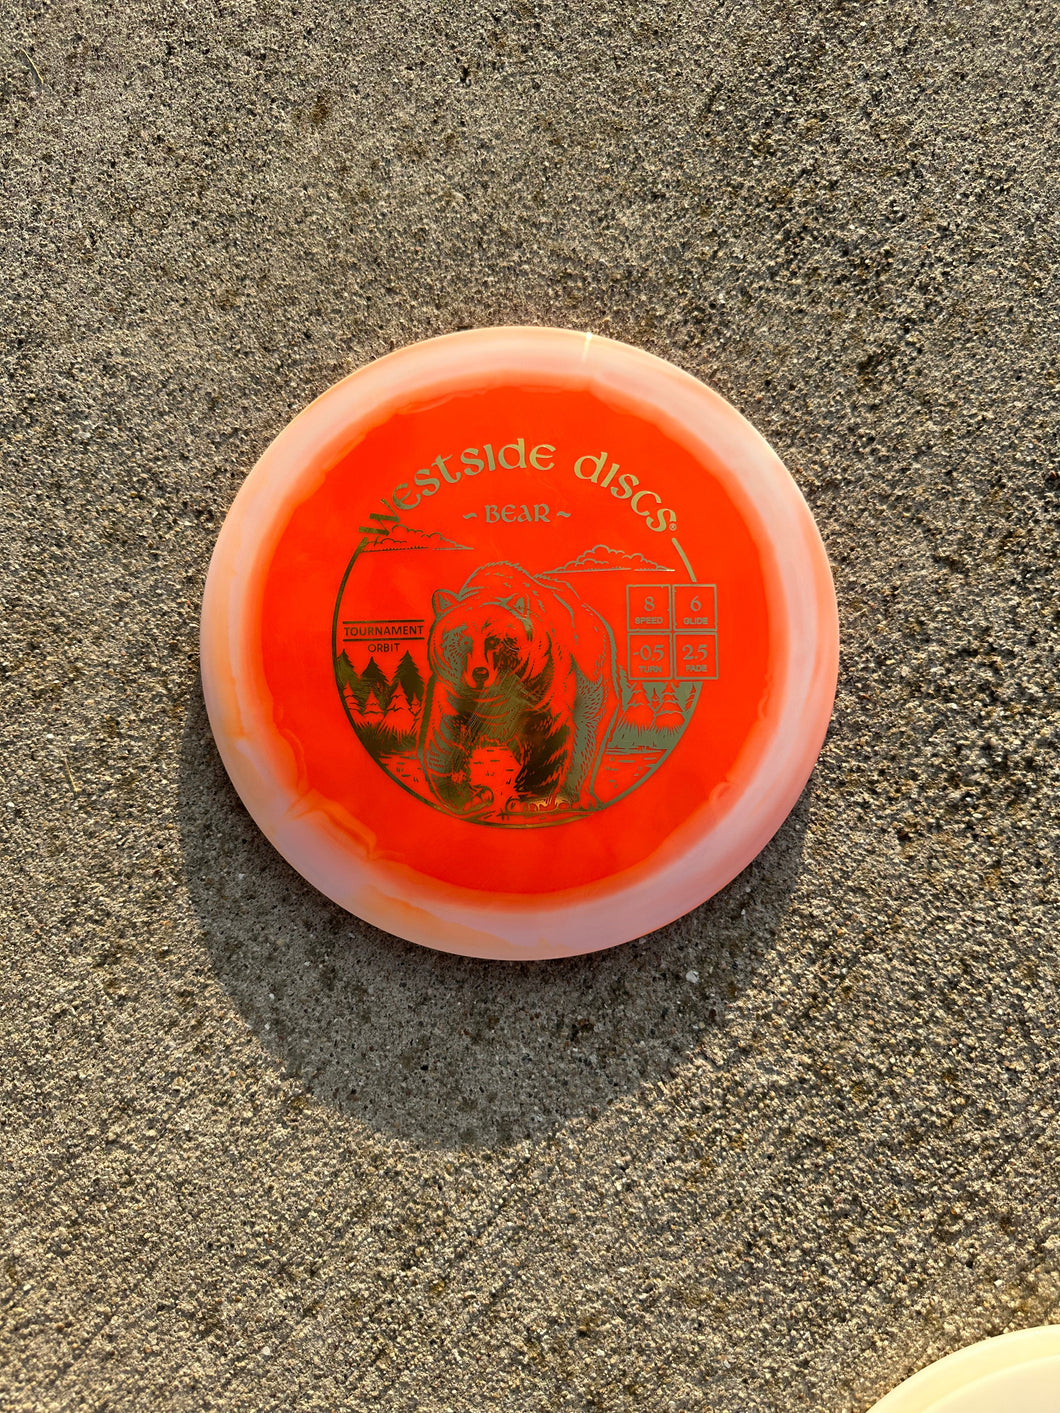 Westside discs Bear Fairway Driver 176g orange